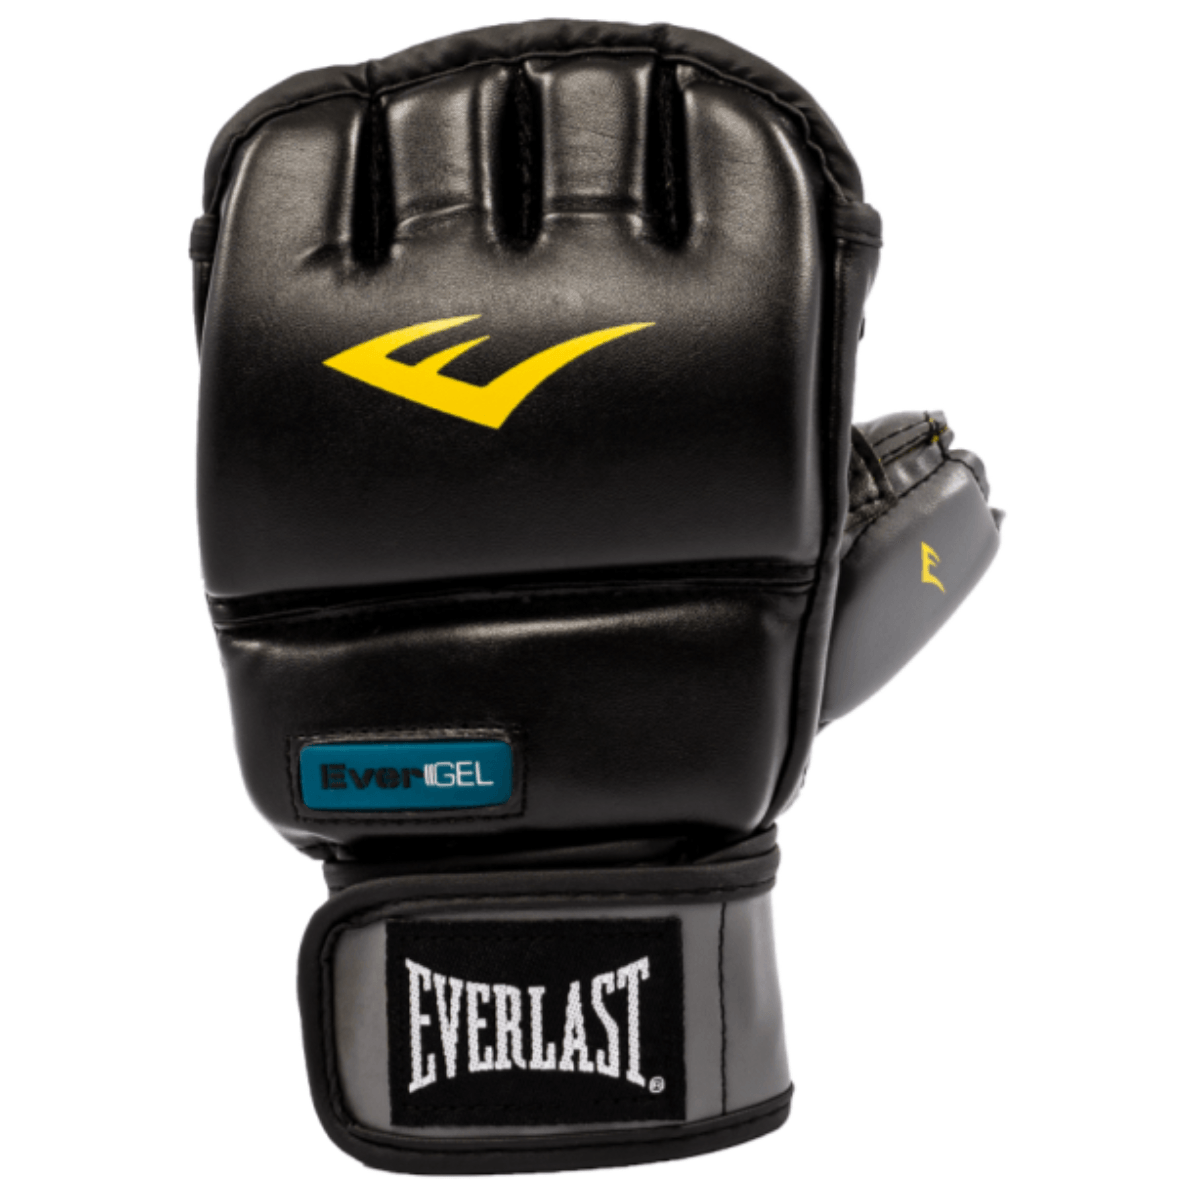 som Geld rubber modus Everlast Evergel Wristwrap Heavy Bag Boxing Glove - Als.com